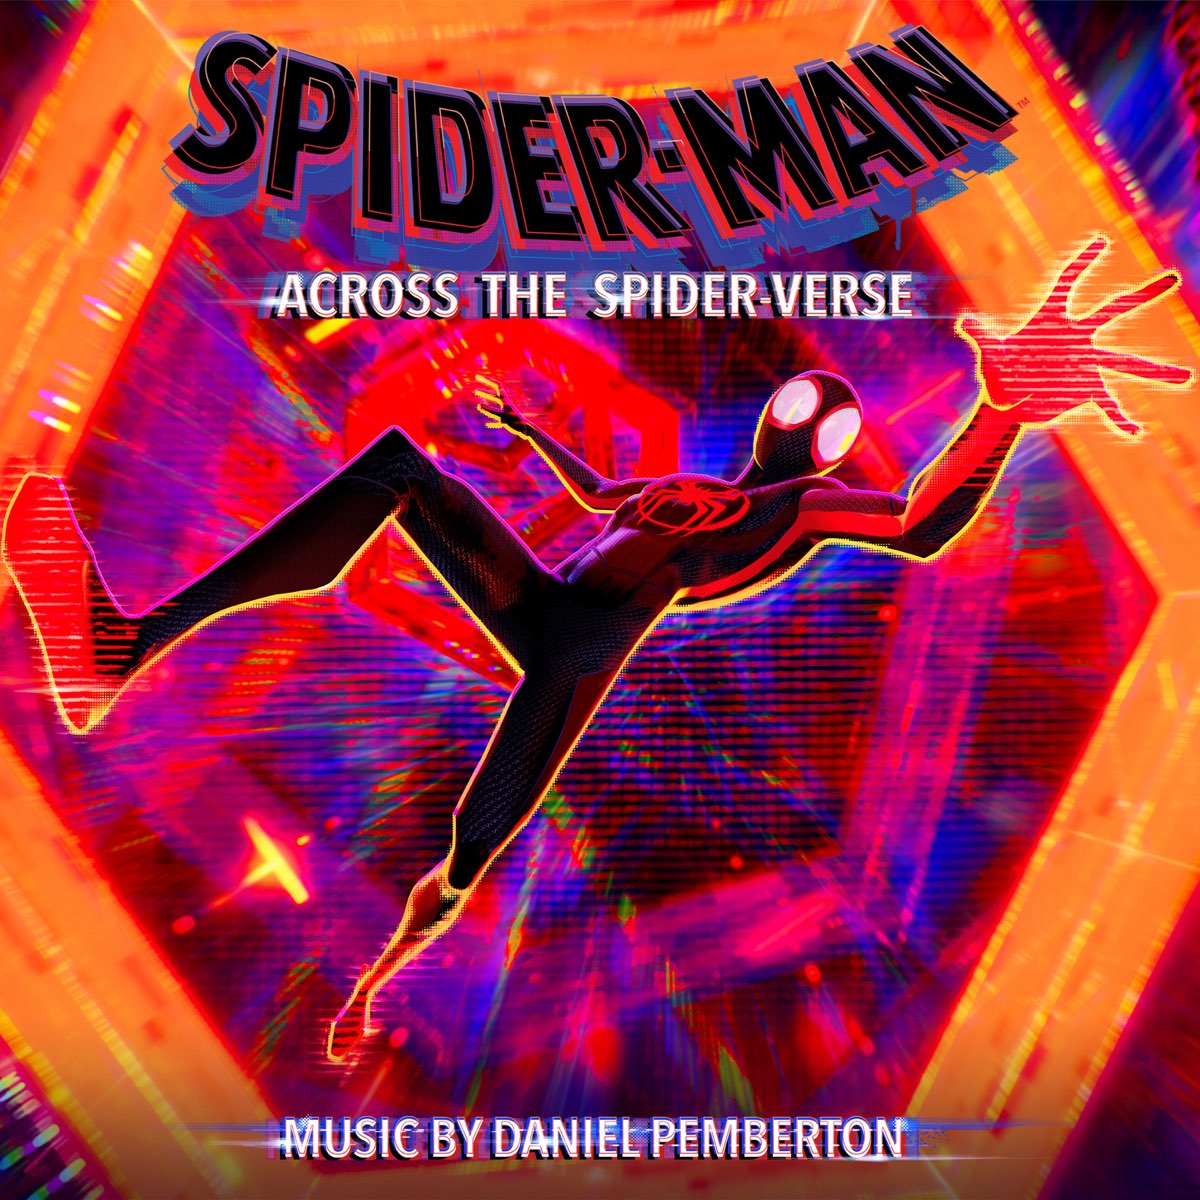 ‎SpiderMan Across the SpiderVerse (Original Score) by Daniel